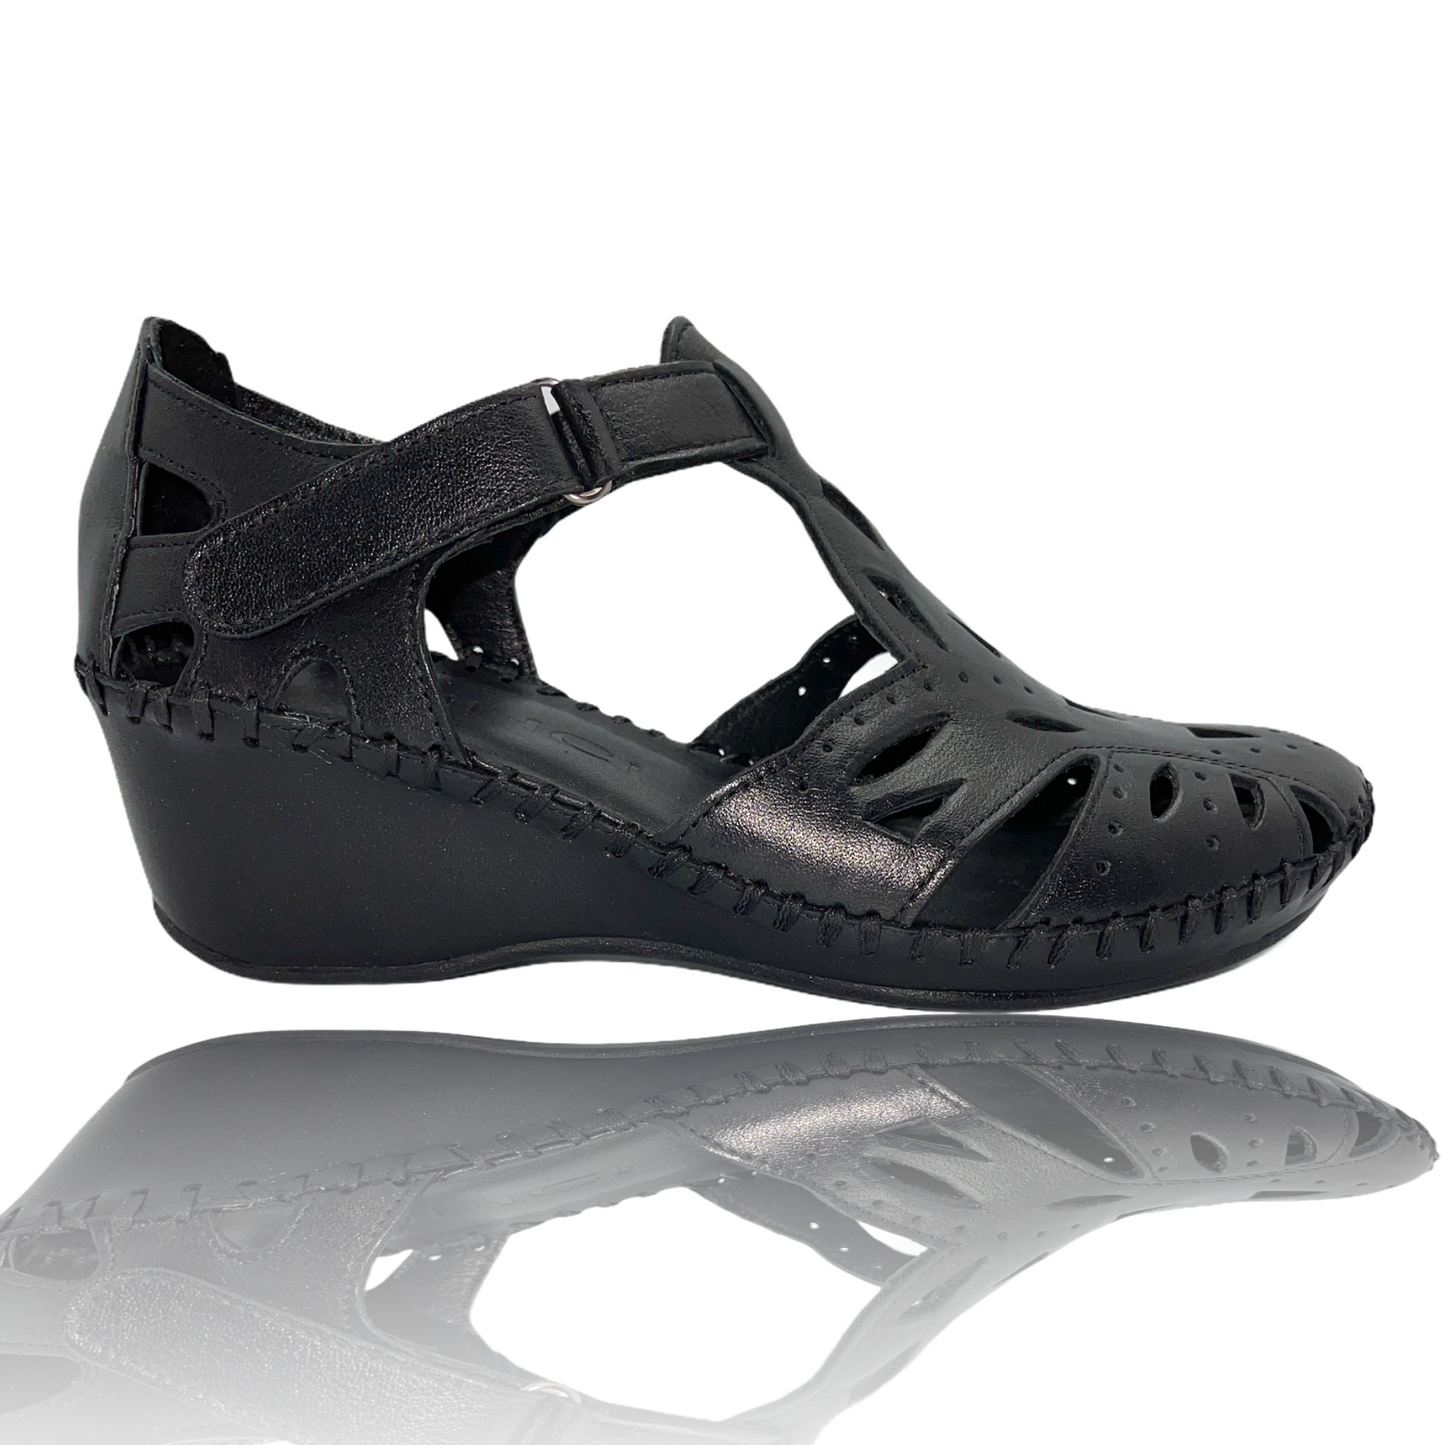 The Tonmawr Black Leather Sandal Final Sale!